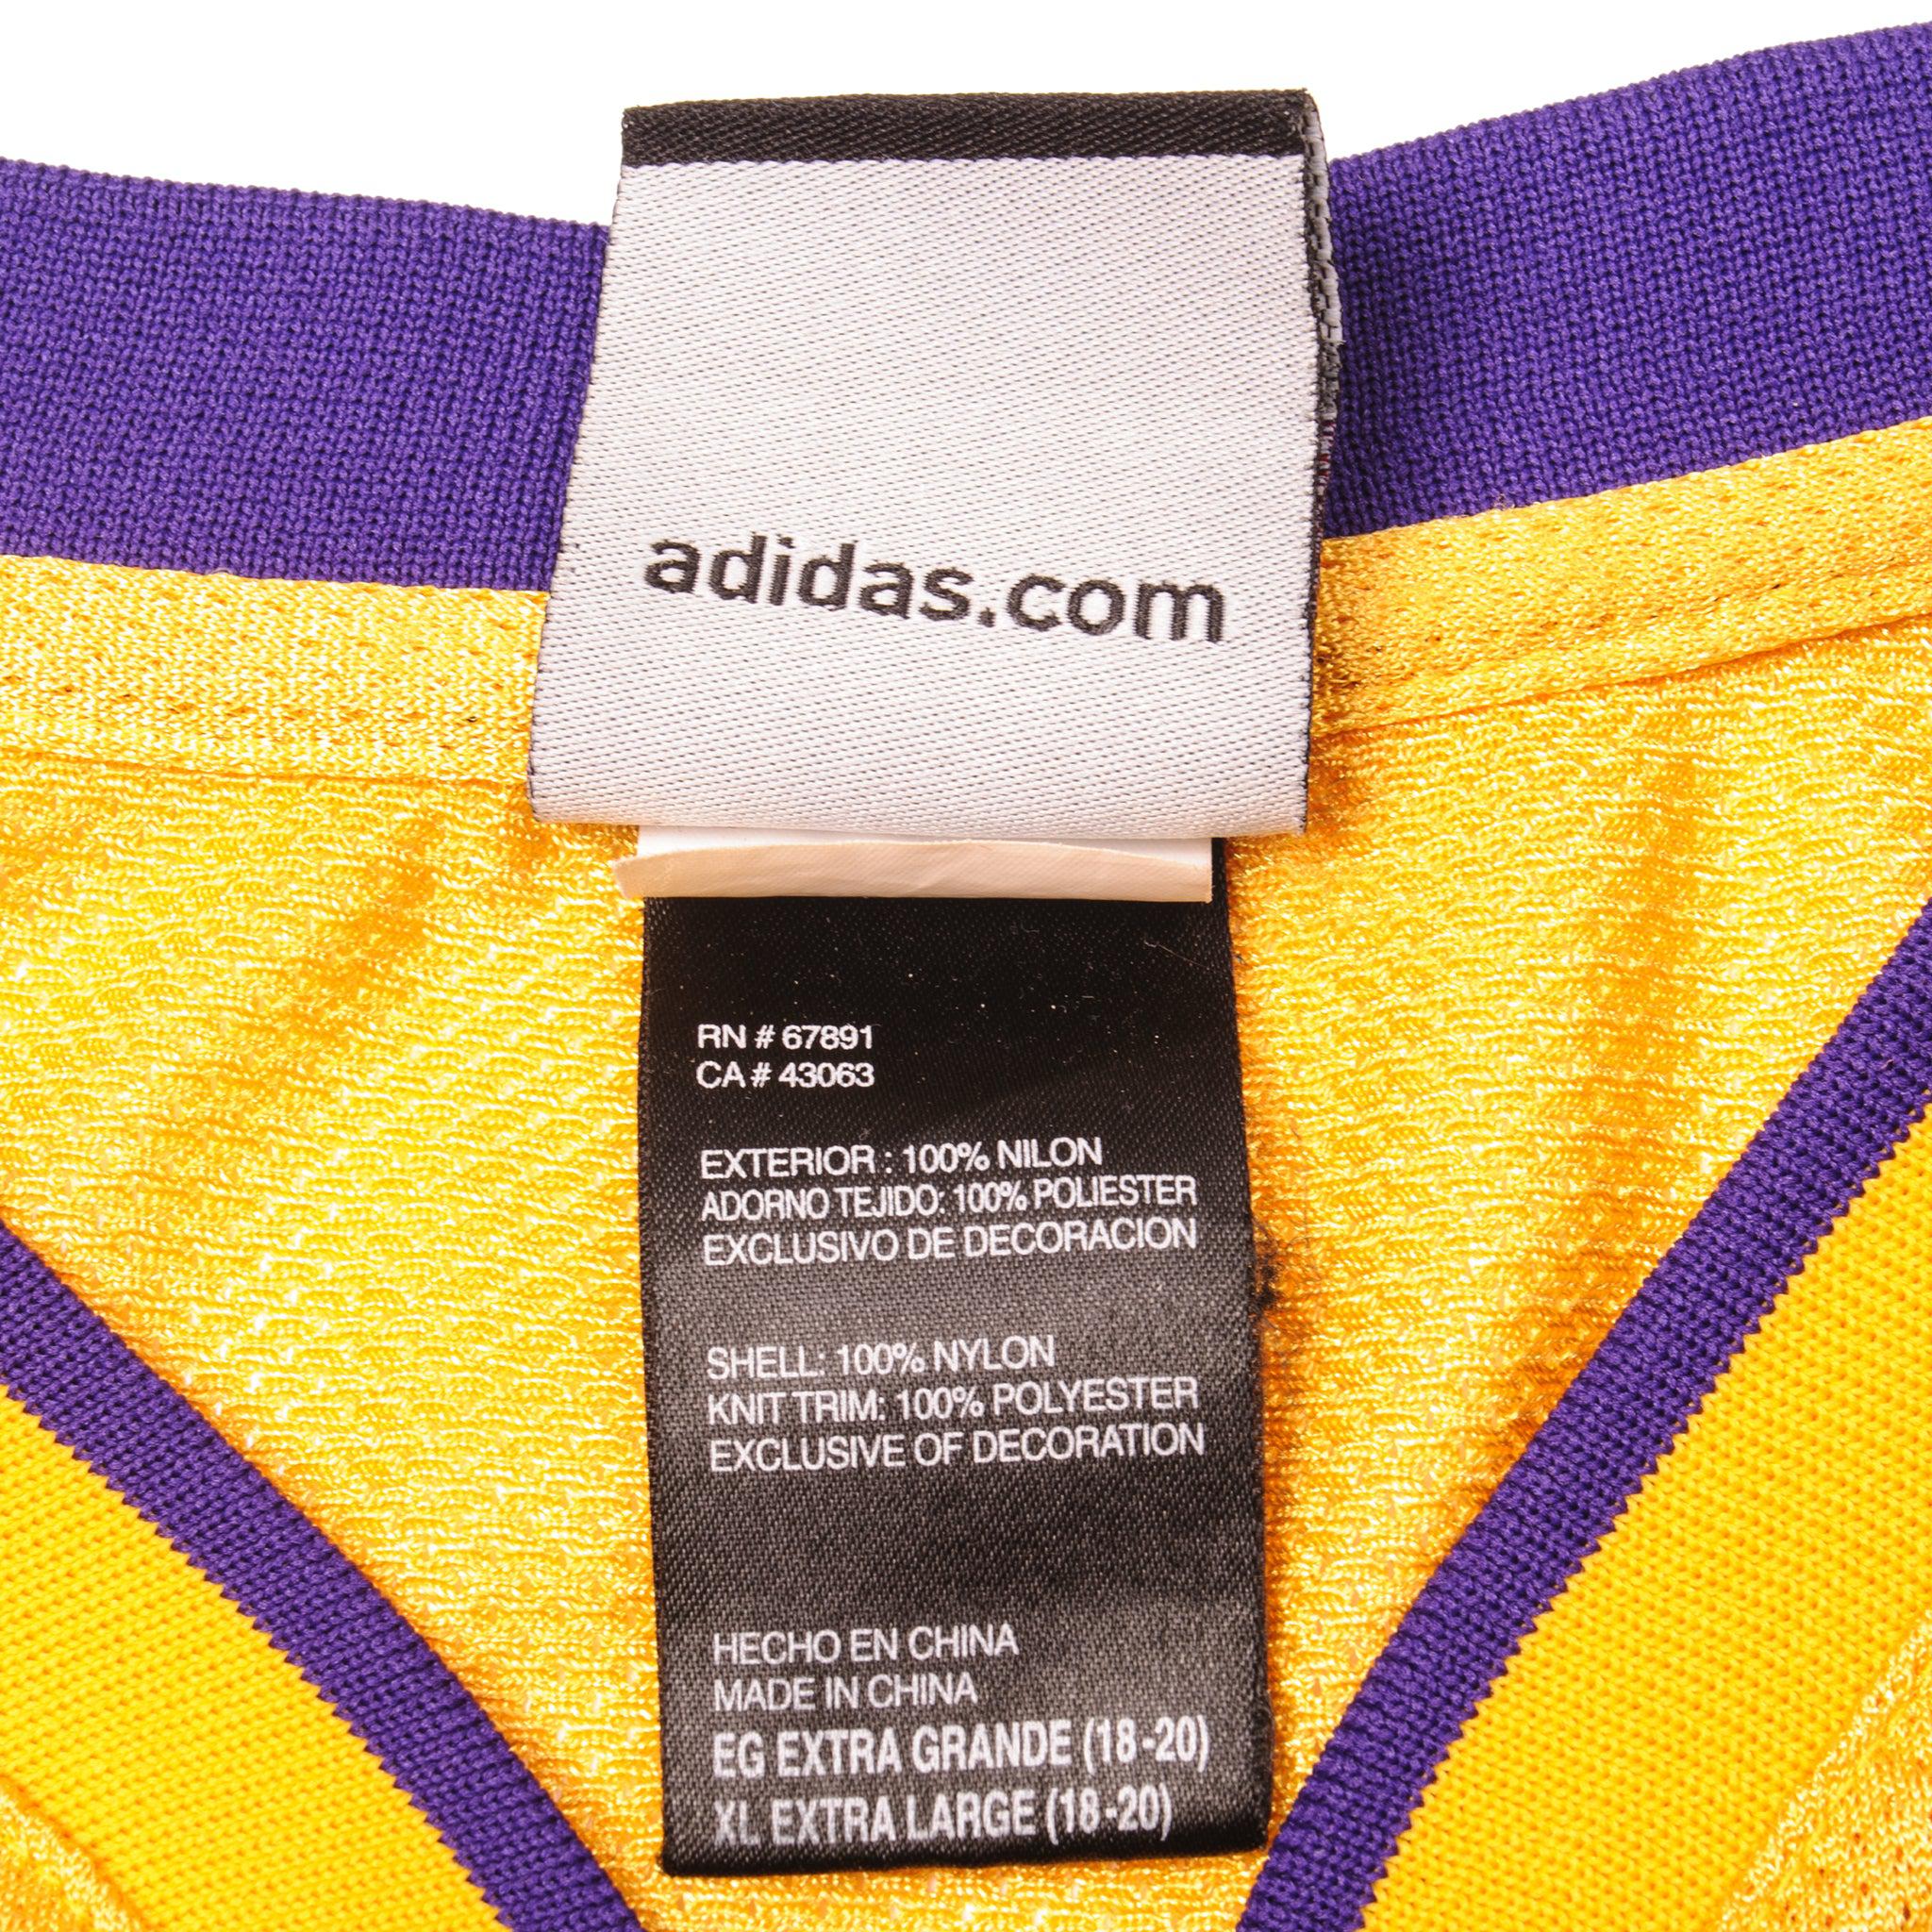 LA Lakers Kobe Bryant #24 Jersey Purple NBA Authentic Collection Adidas  Size 50